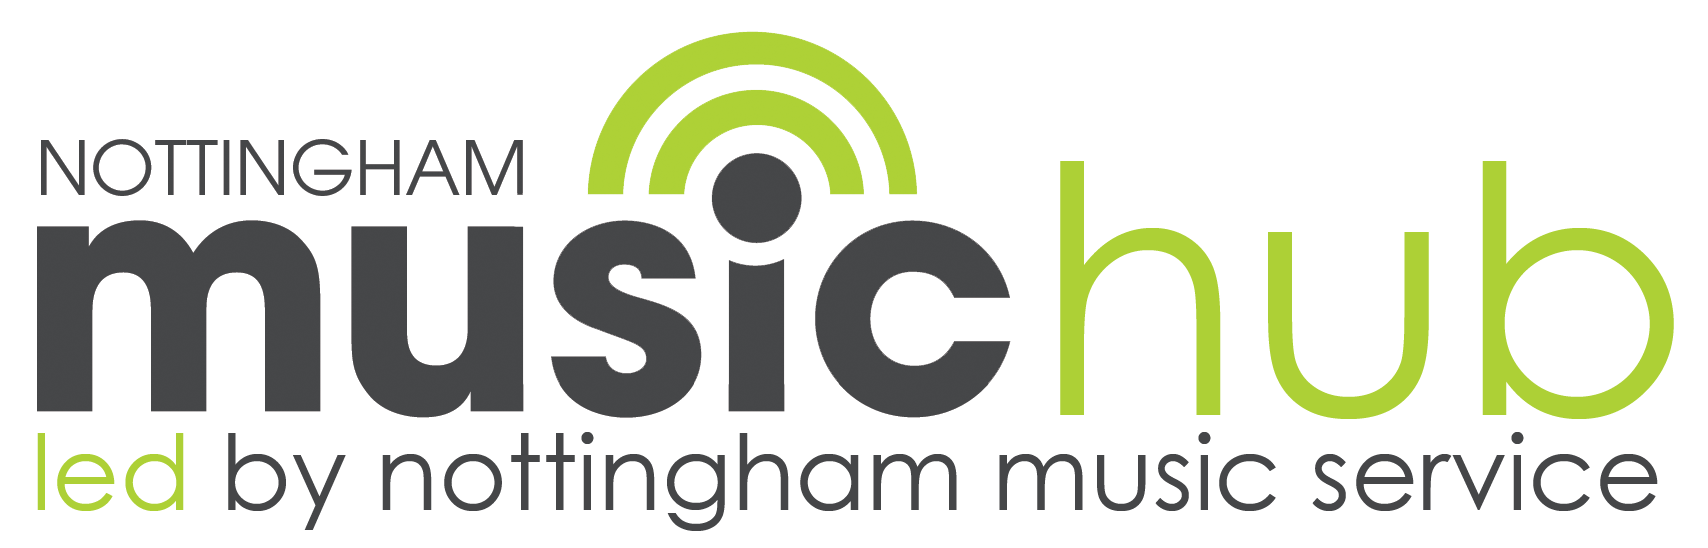 New Music Service Logo -Final.png